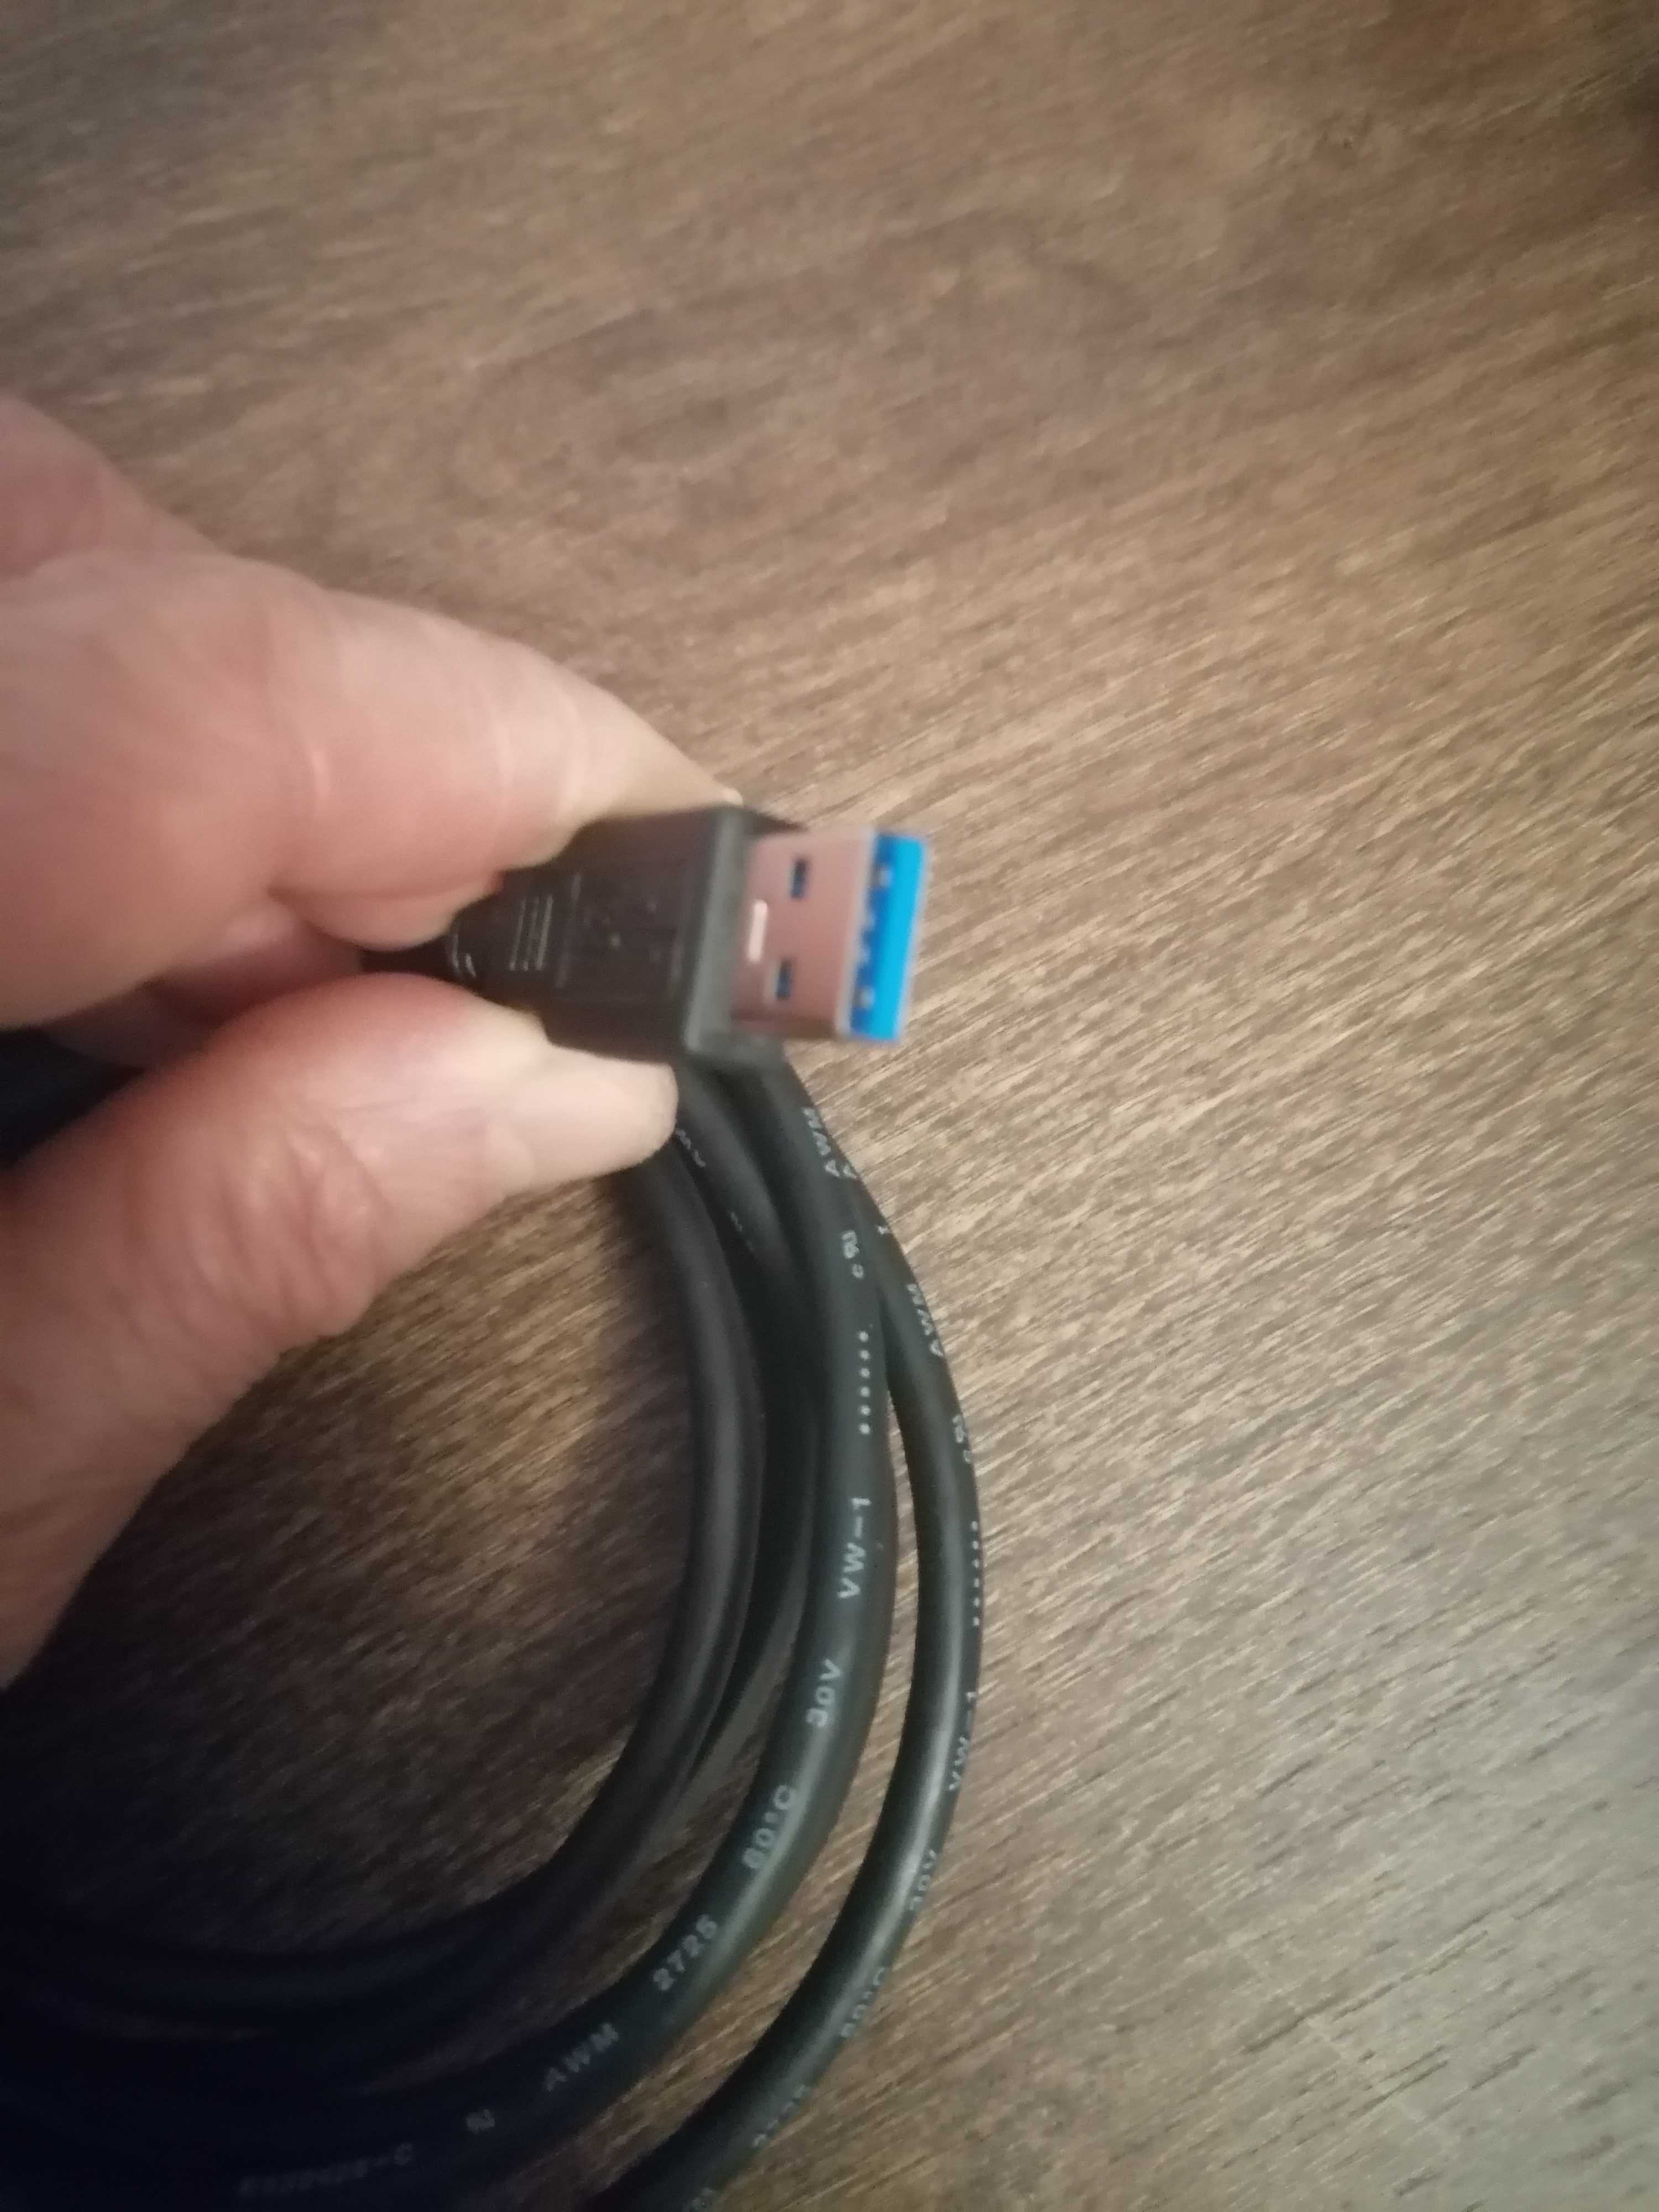 Cablu monitor DVI, cablu USB3 tipB,  alimentatoare laptop